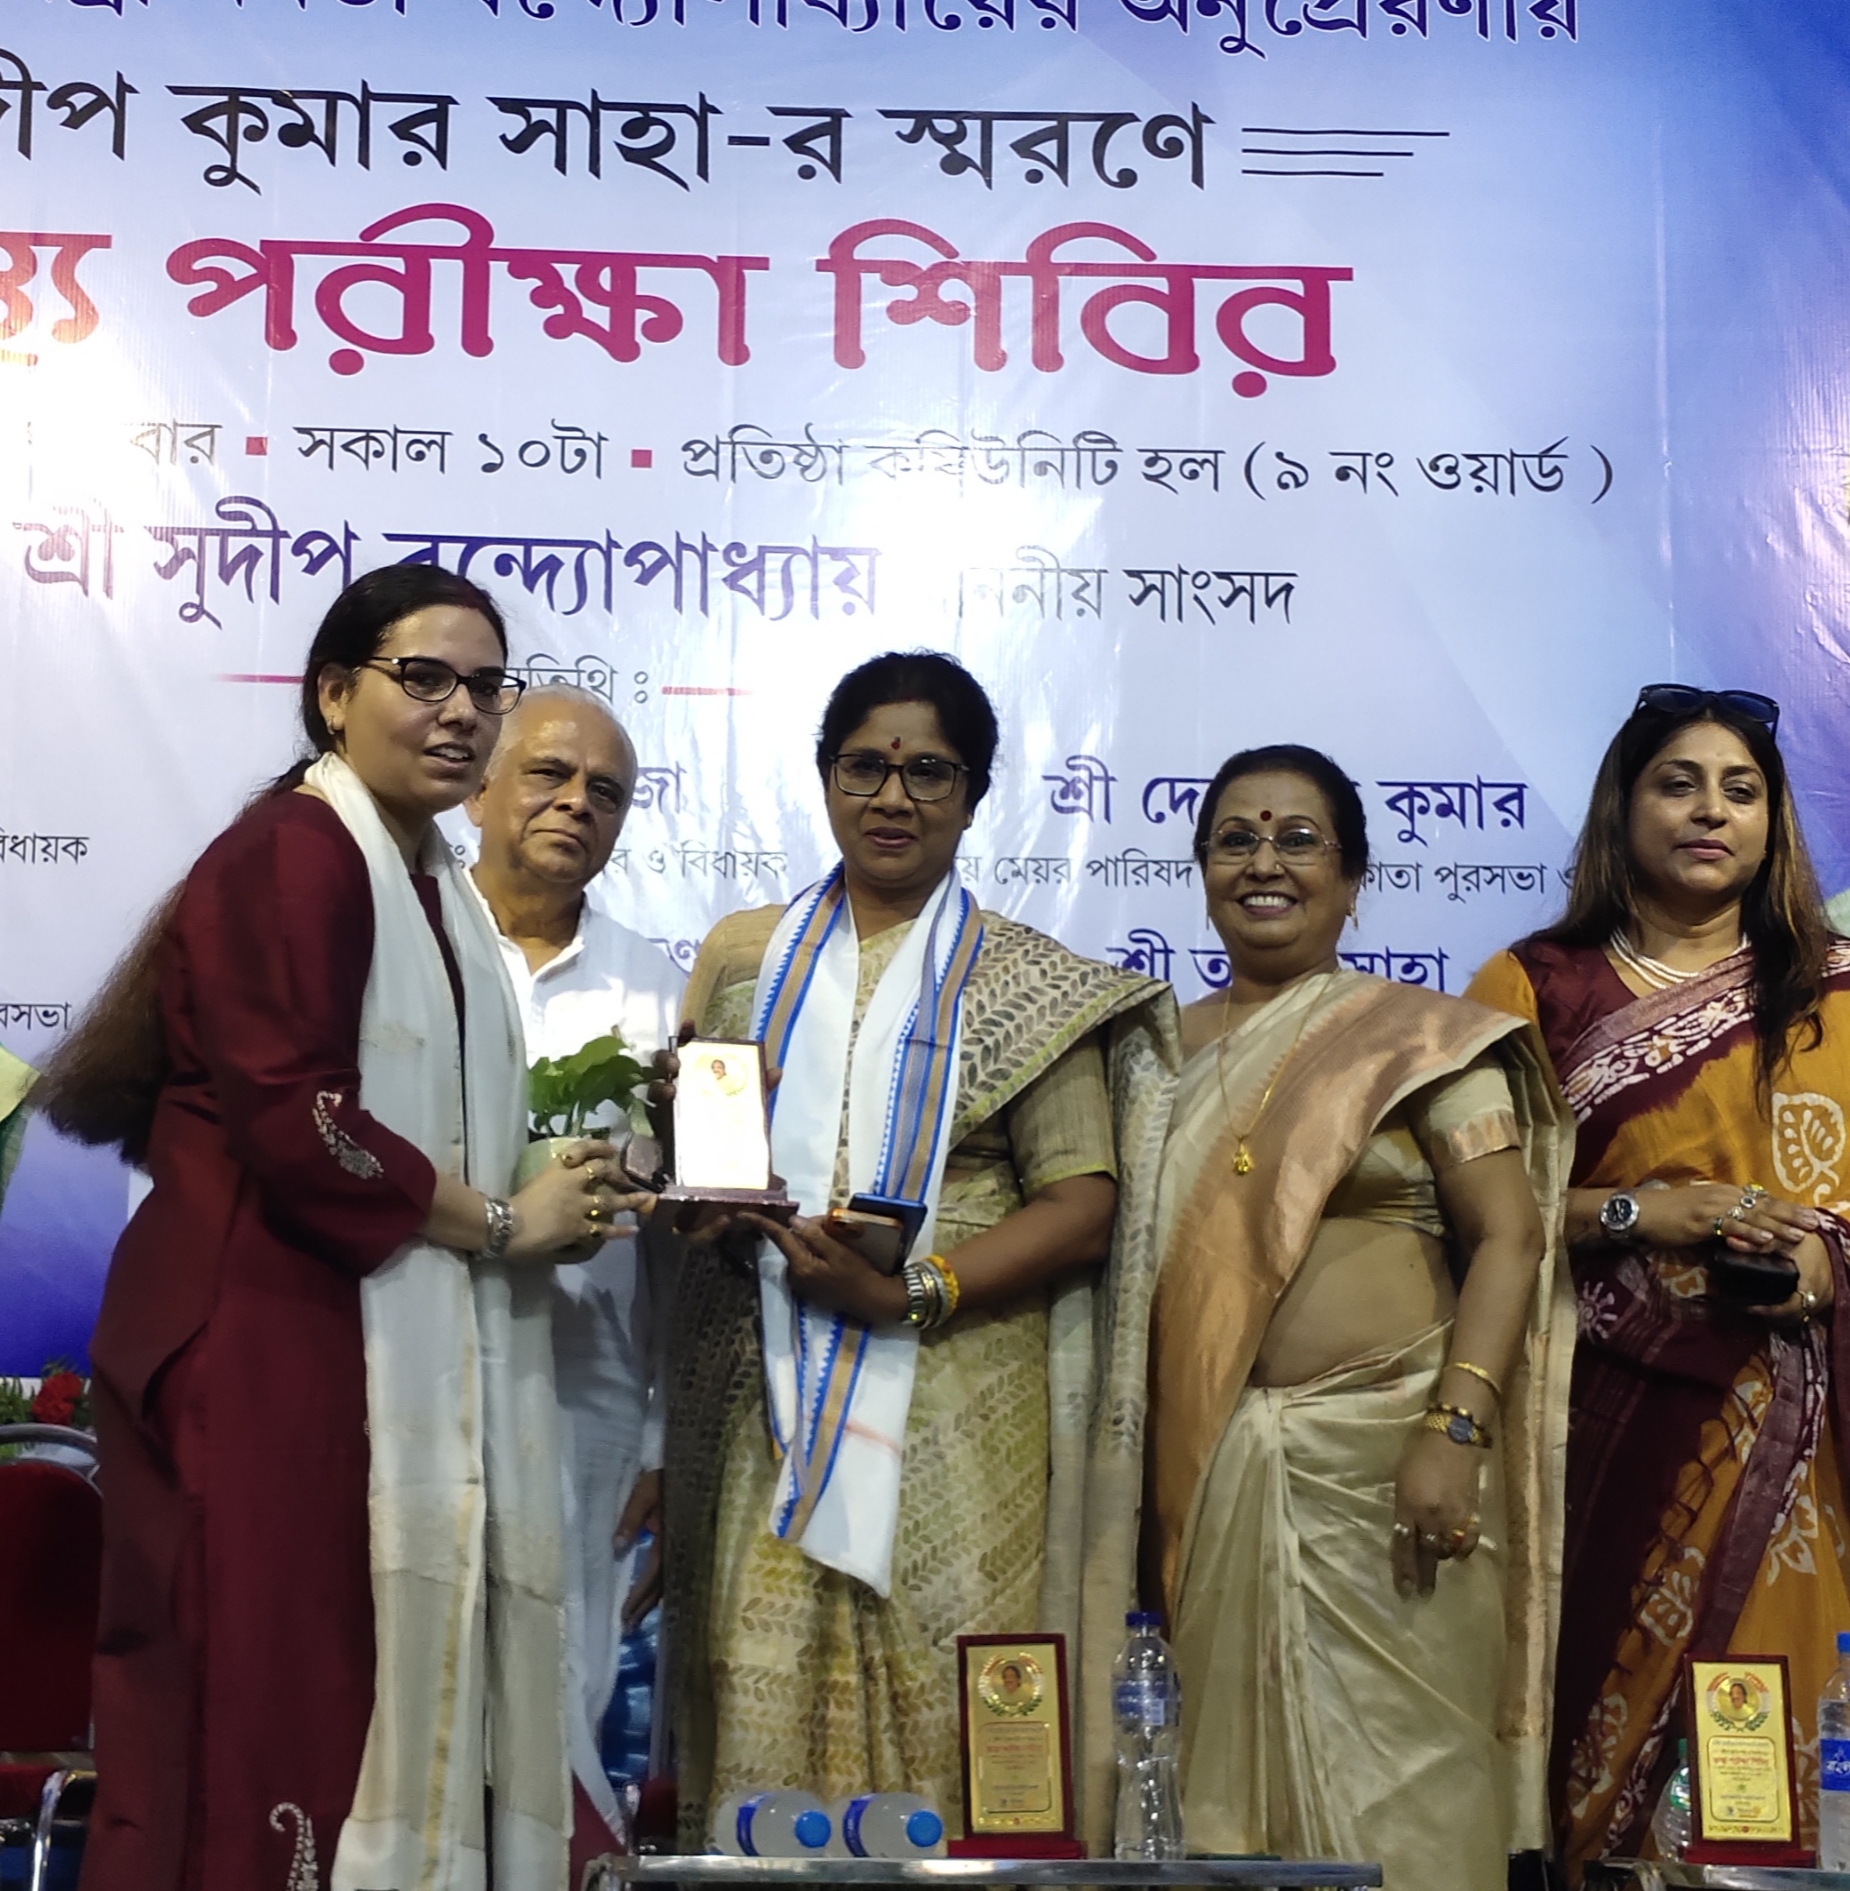 (L-R) Smt Promita Saha Khan; Shri Kanak Dutta, President, Rotary Club of Calcutta; Dr Sashi Panja, Honourable Minister of Women & Child Development & Social Welfare, WB; Smt Mitali Saha, Counsellor Ward No 09 and others.